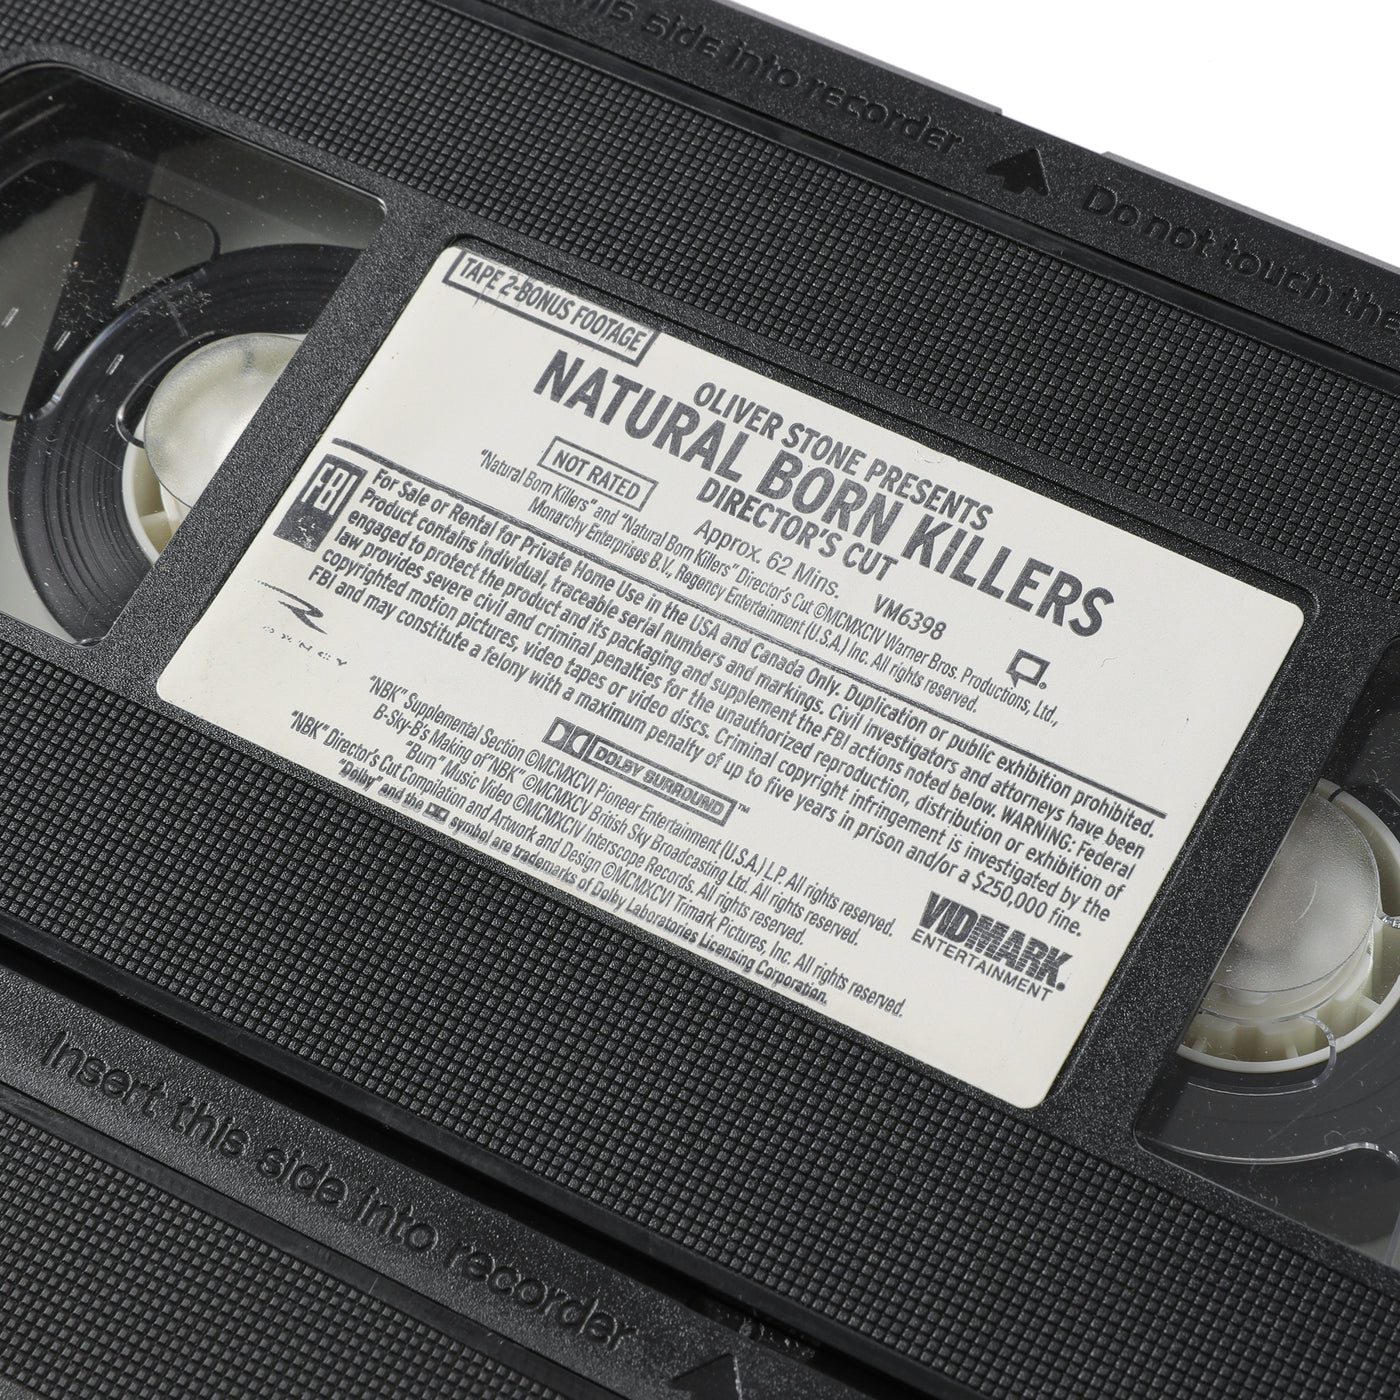 90s Natural Born Killers Director's cut VHS